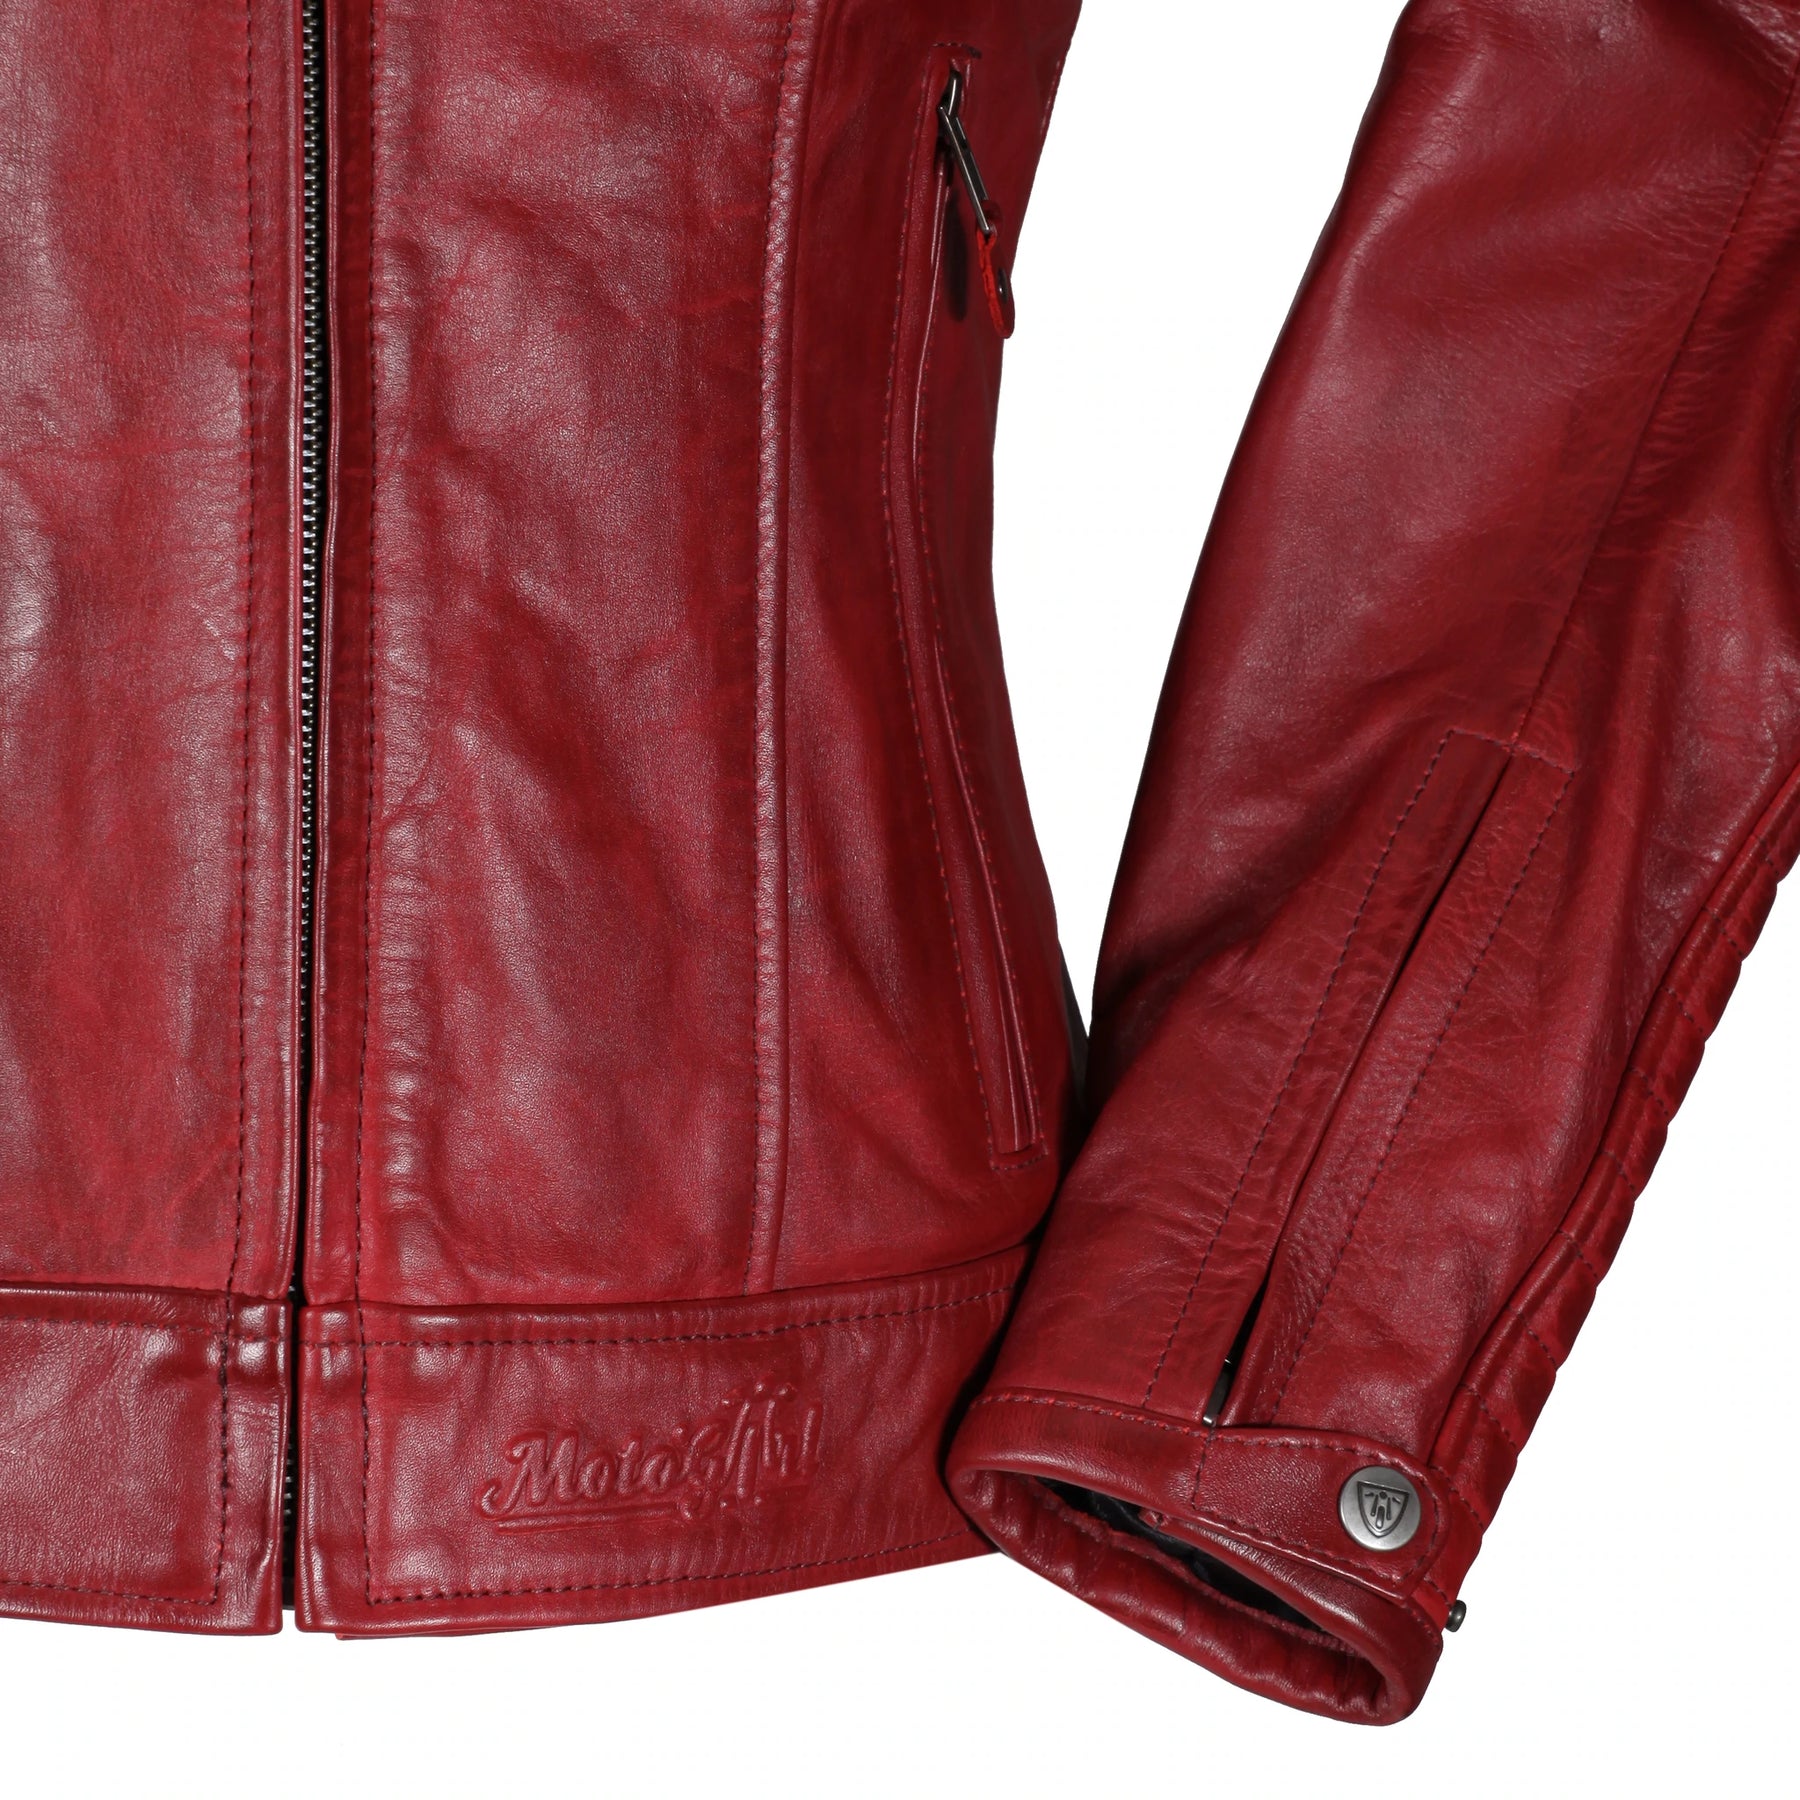 Motogirl Valerie Red Leather Jacket